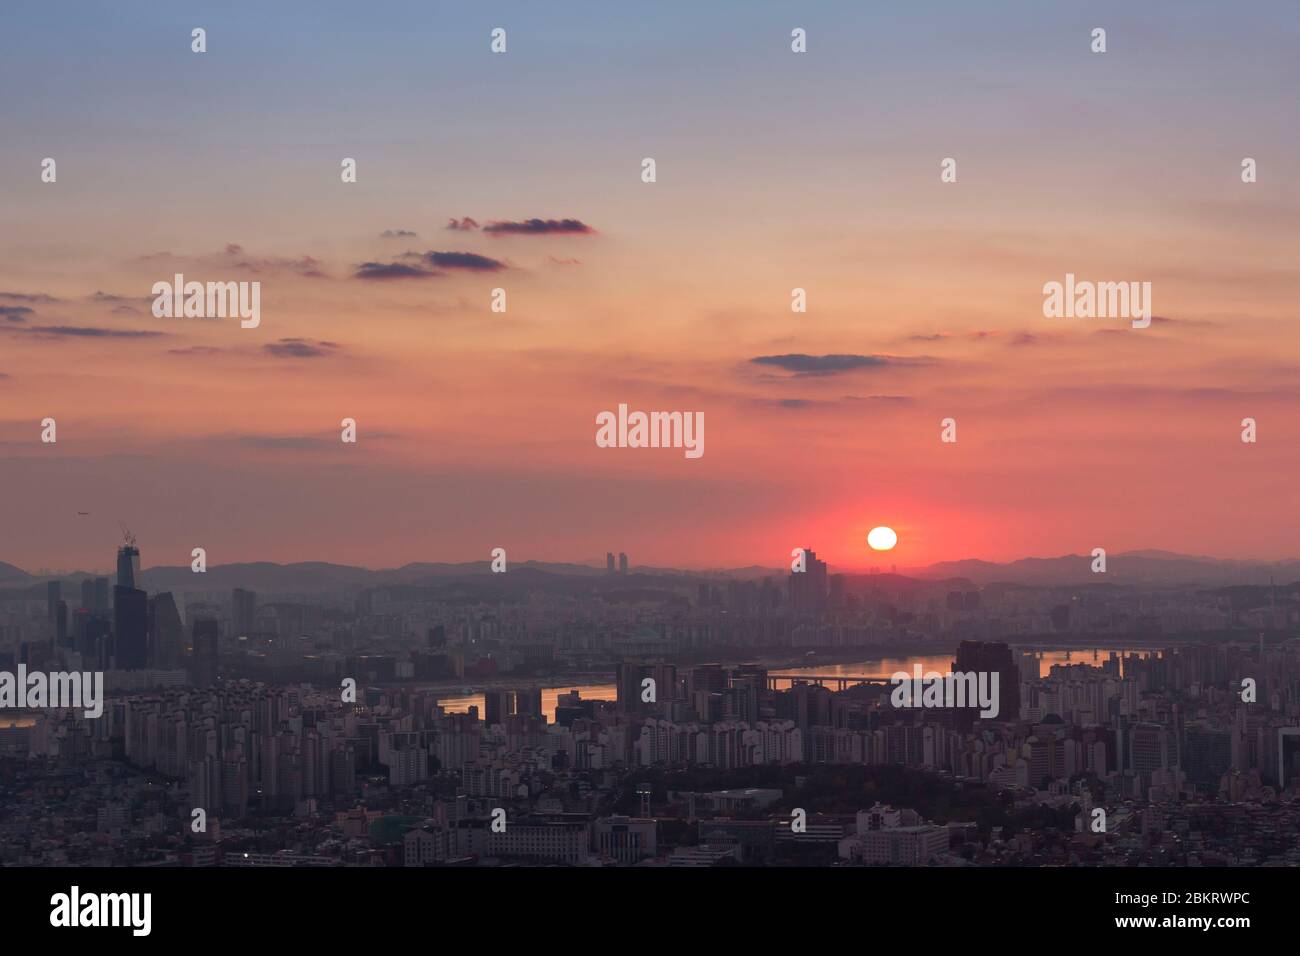 South Korea, Seoul, Namsan, sunset over the city skyline and the Han River Stock Photo